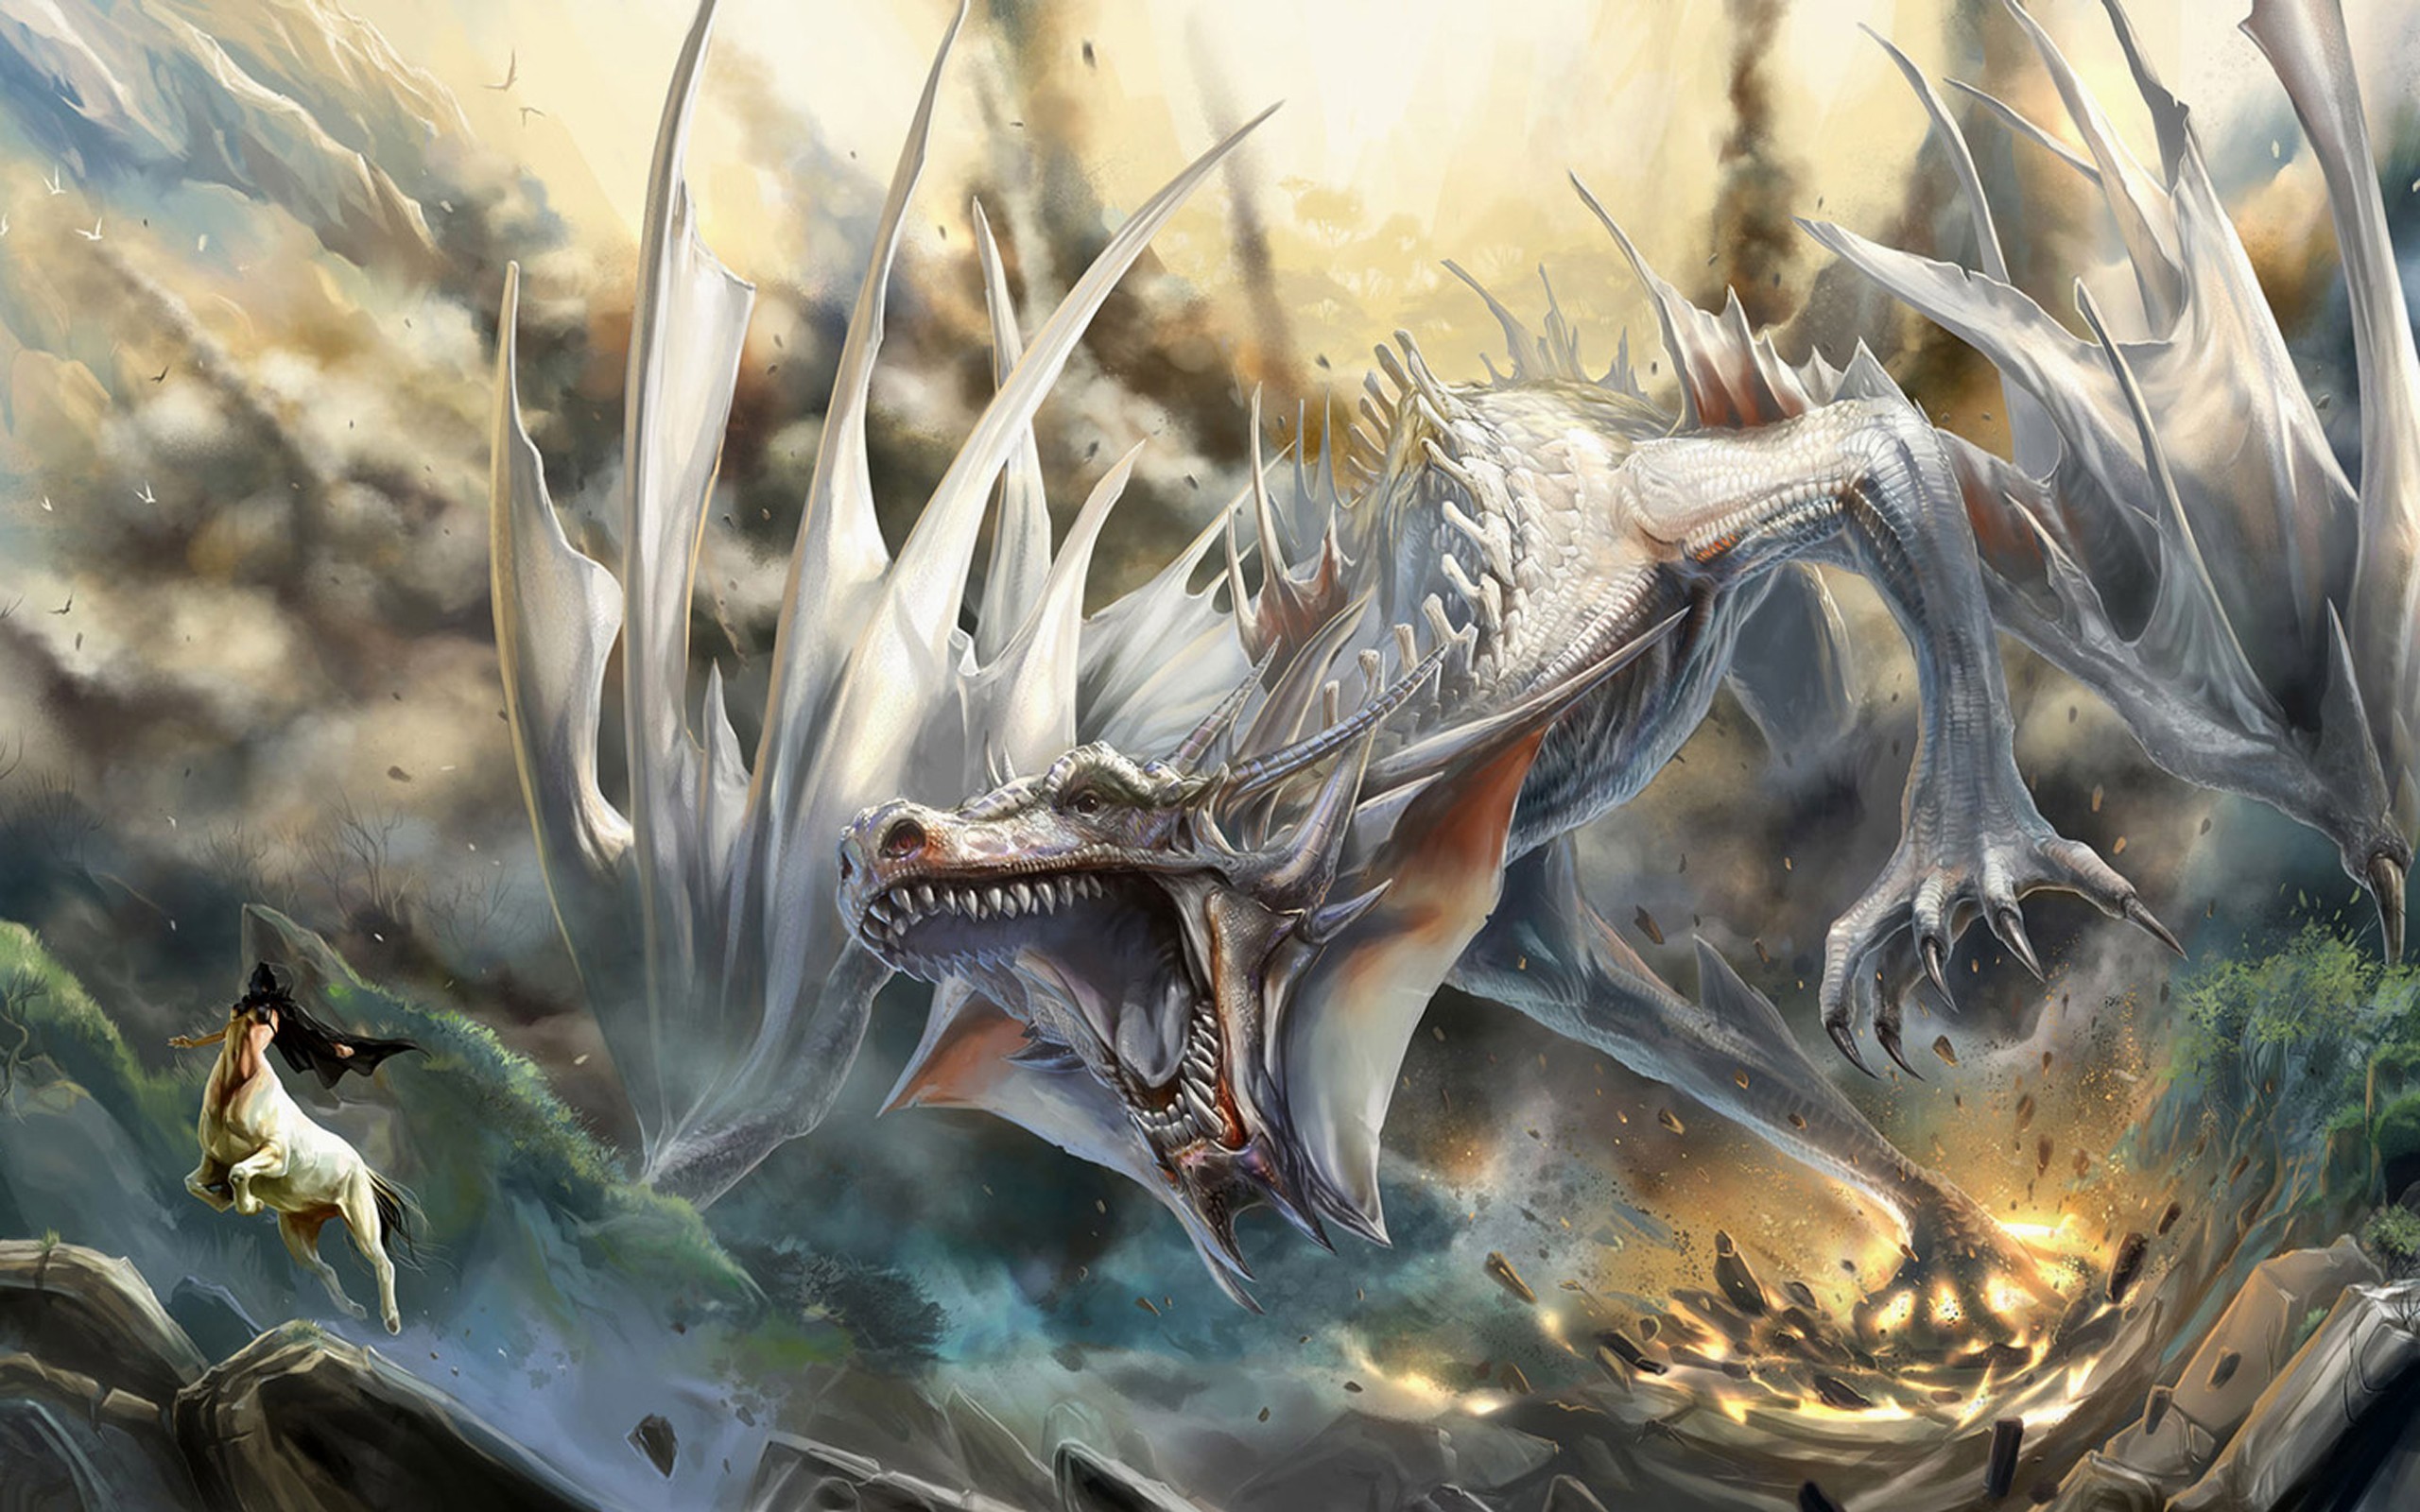 General 2560x1600 dragon fantasy art creature Centaurs artwork digital art pointy teeth open mouth running chasing claws